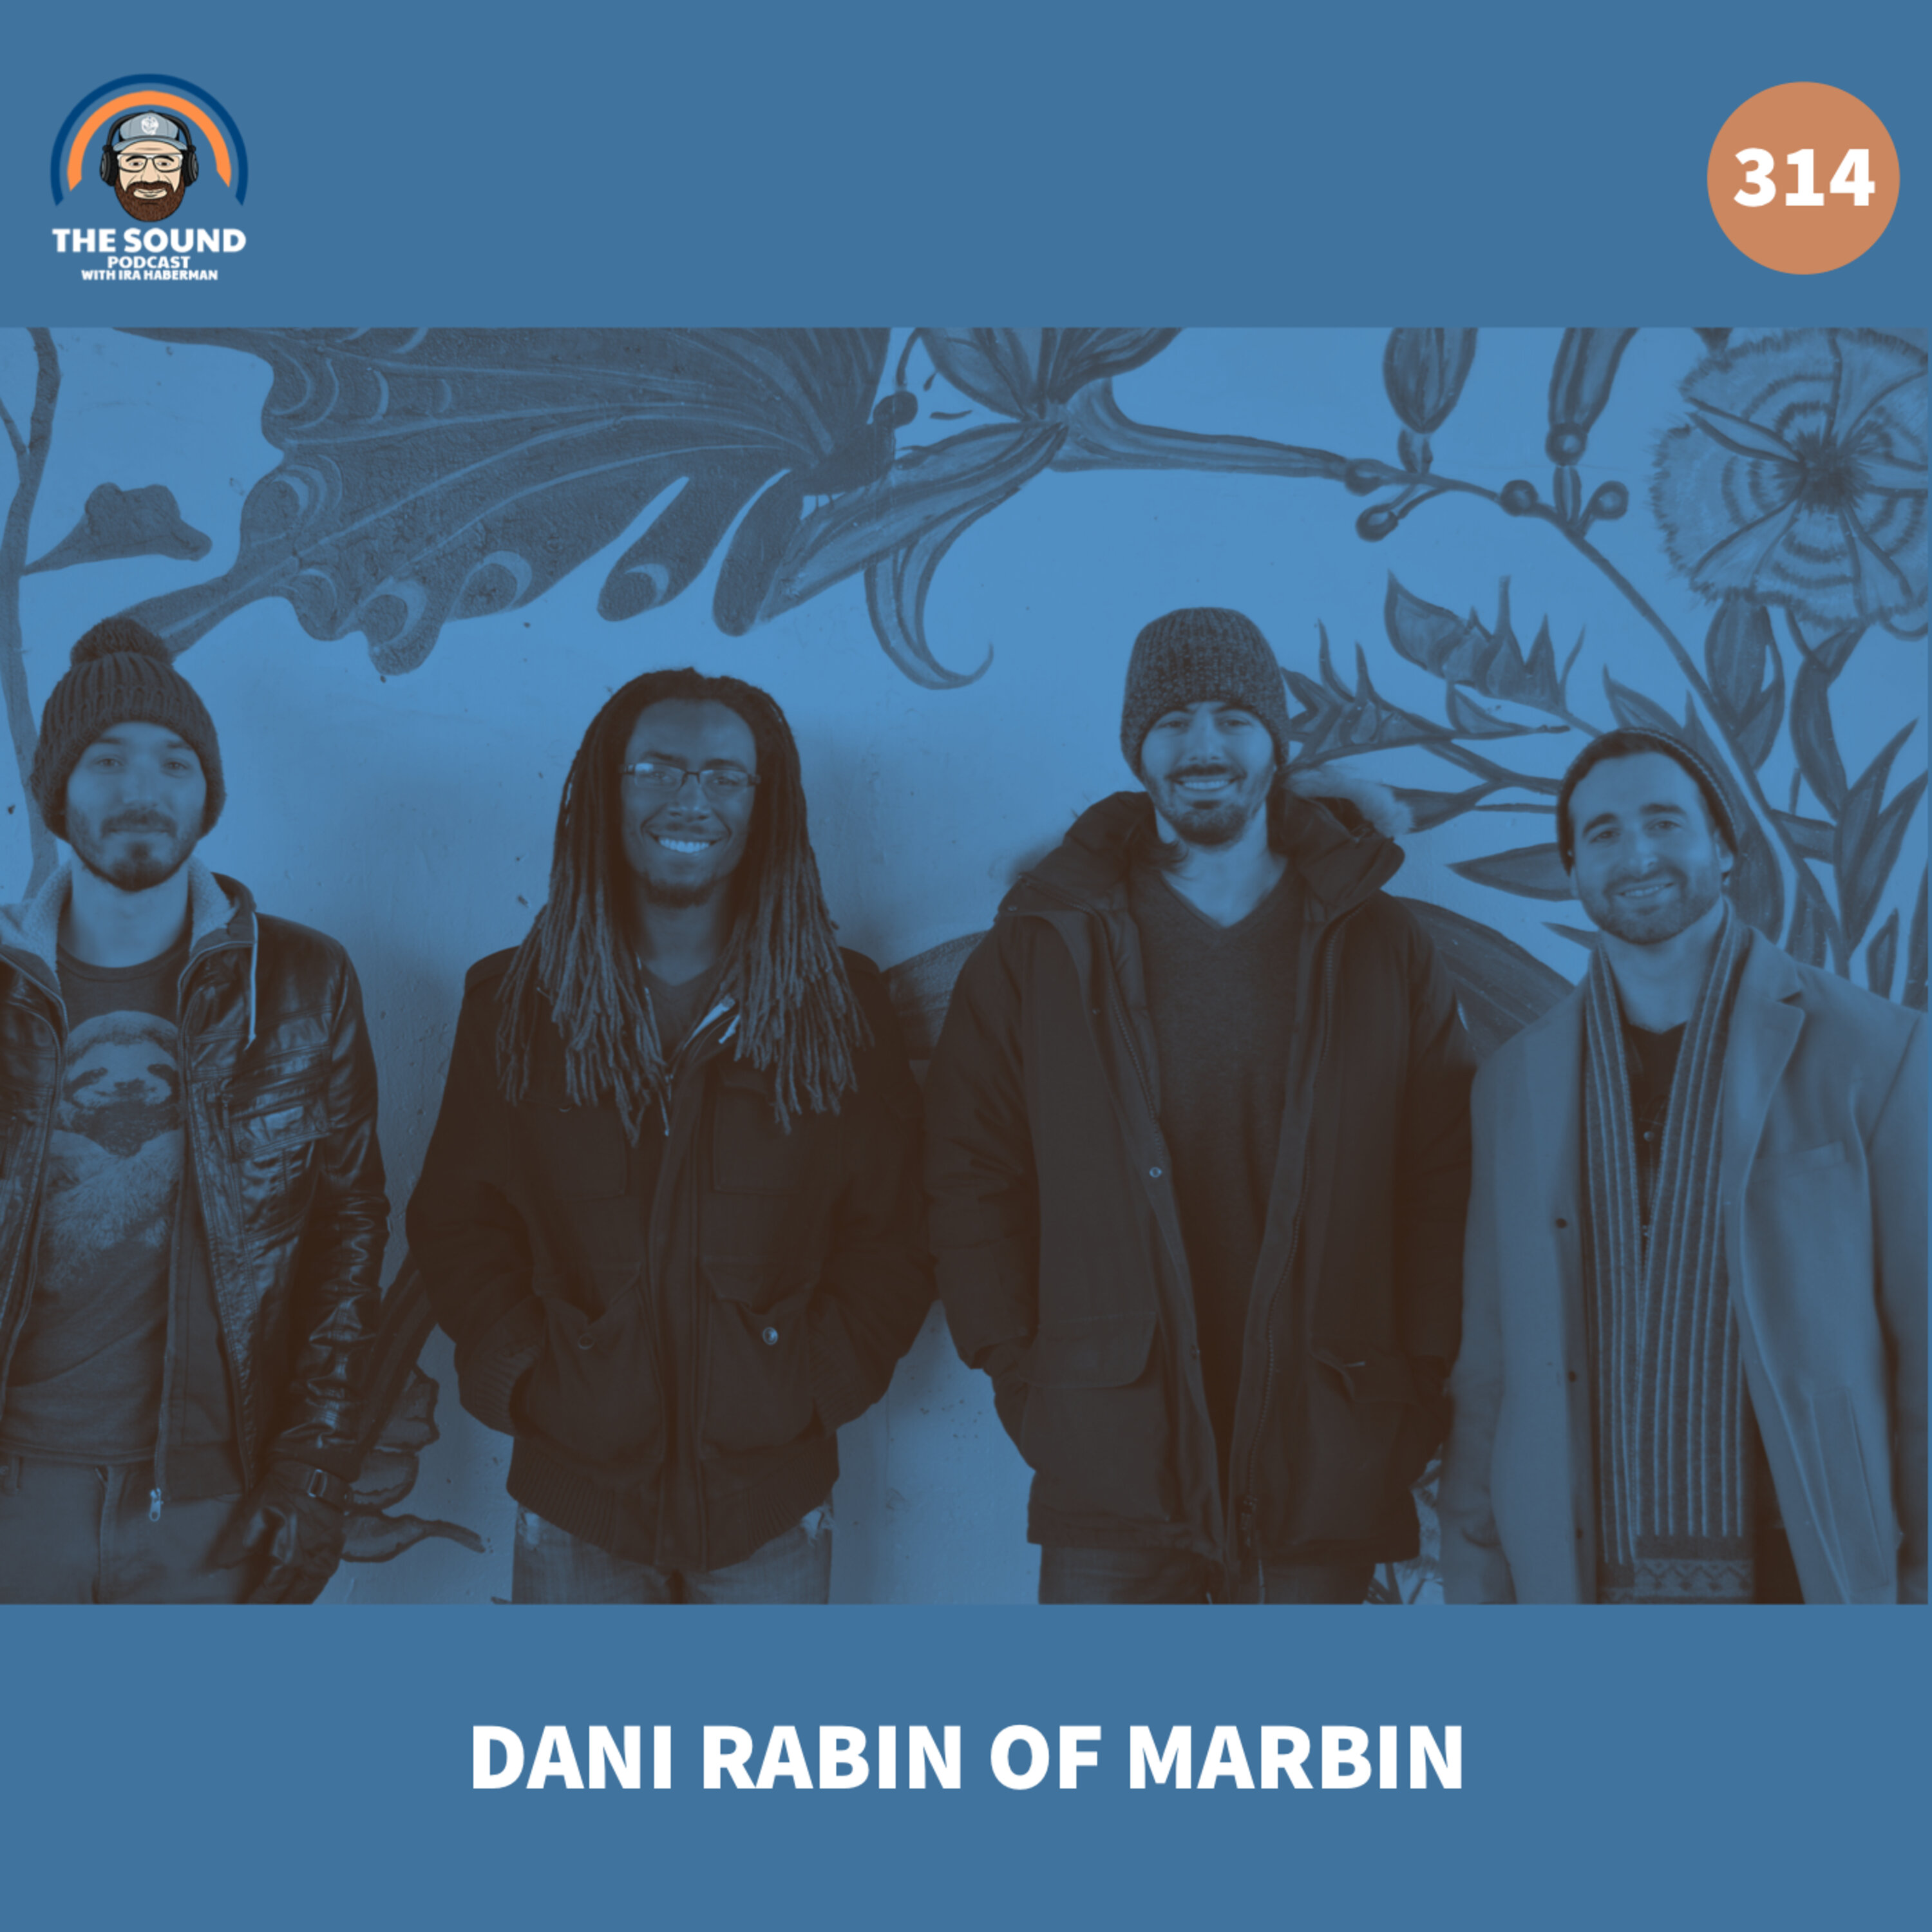 Dani Rabin of Marbin Image